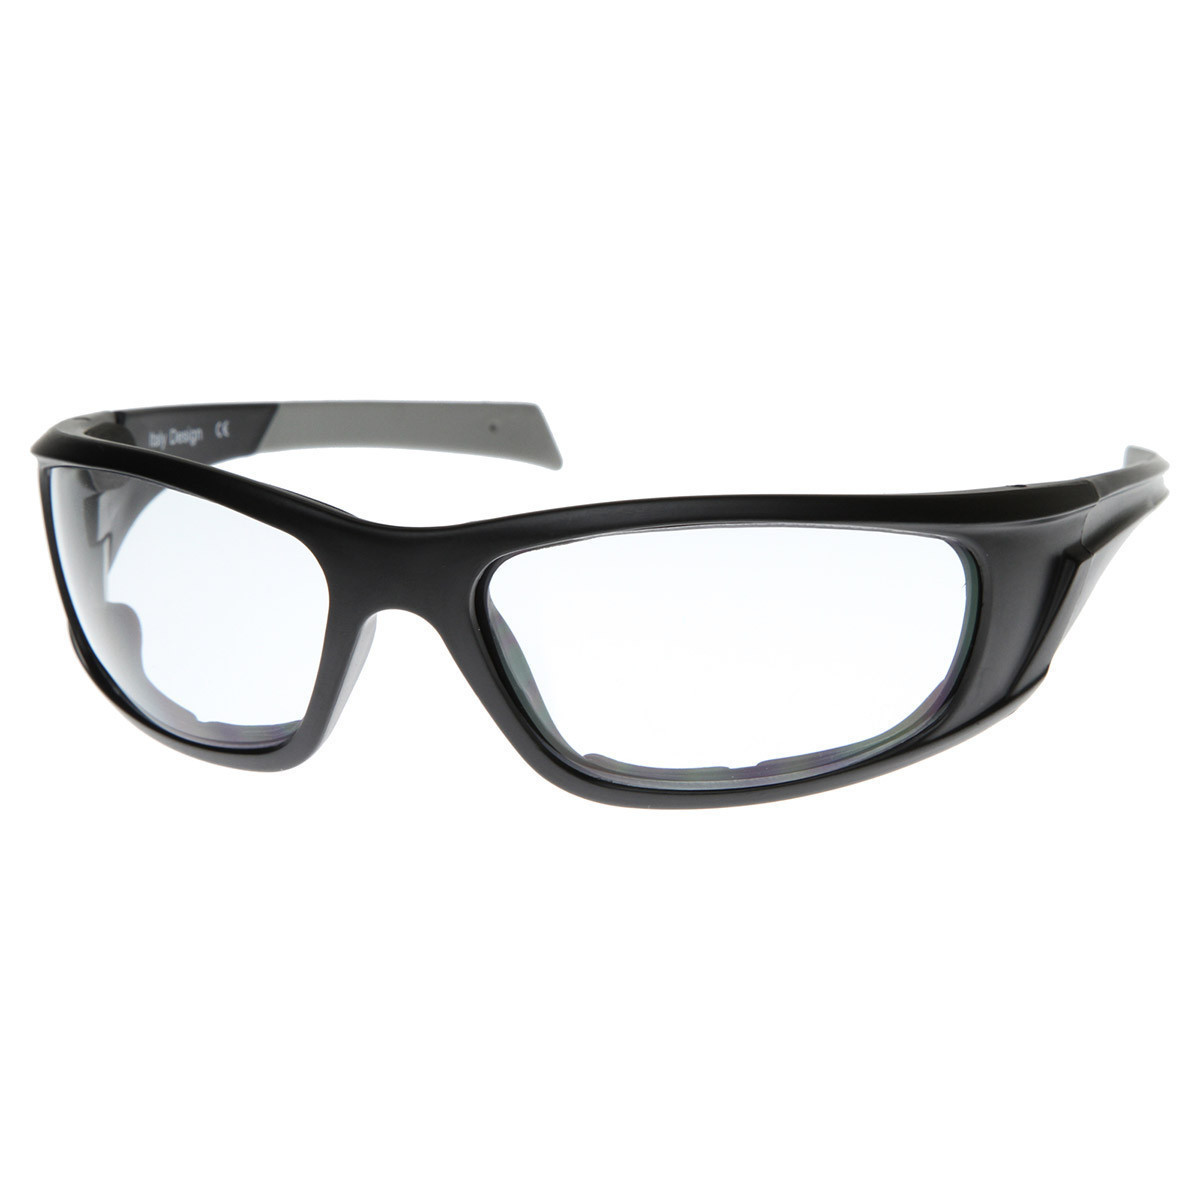 Safety Sports Protective Padded Sunglasses Eyewear Night Riding Glasses - 8326 - Black Smoke